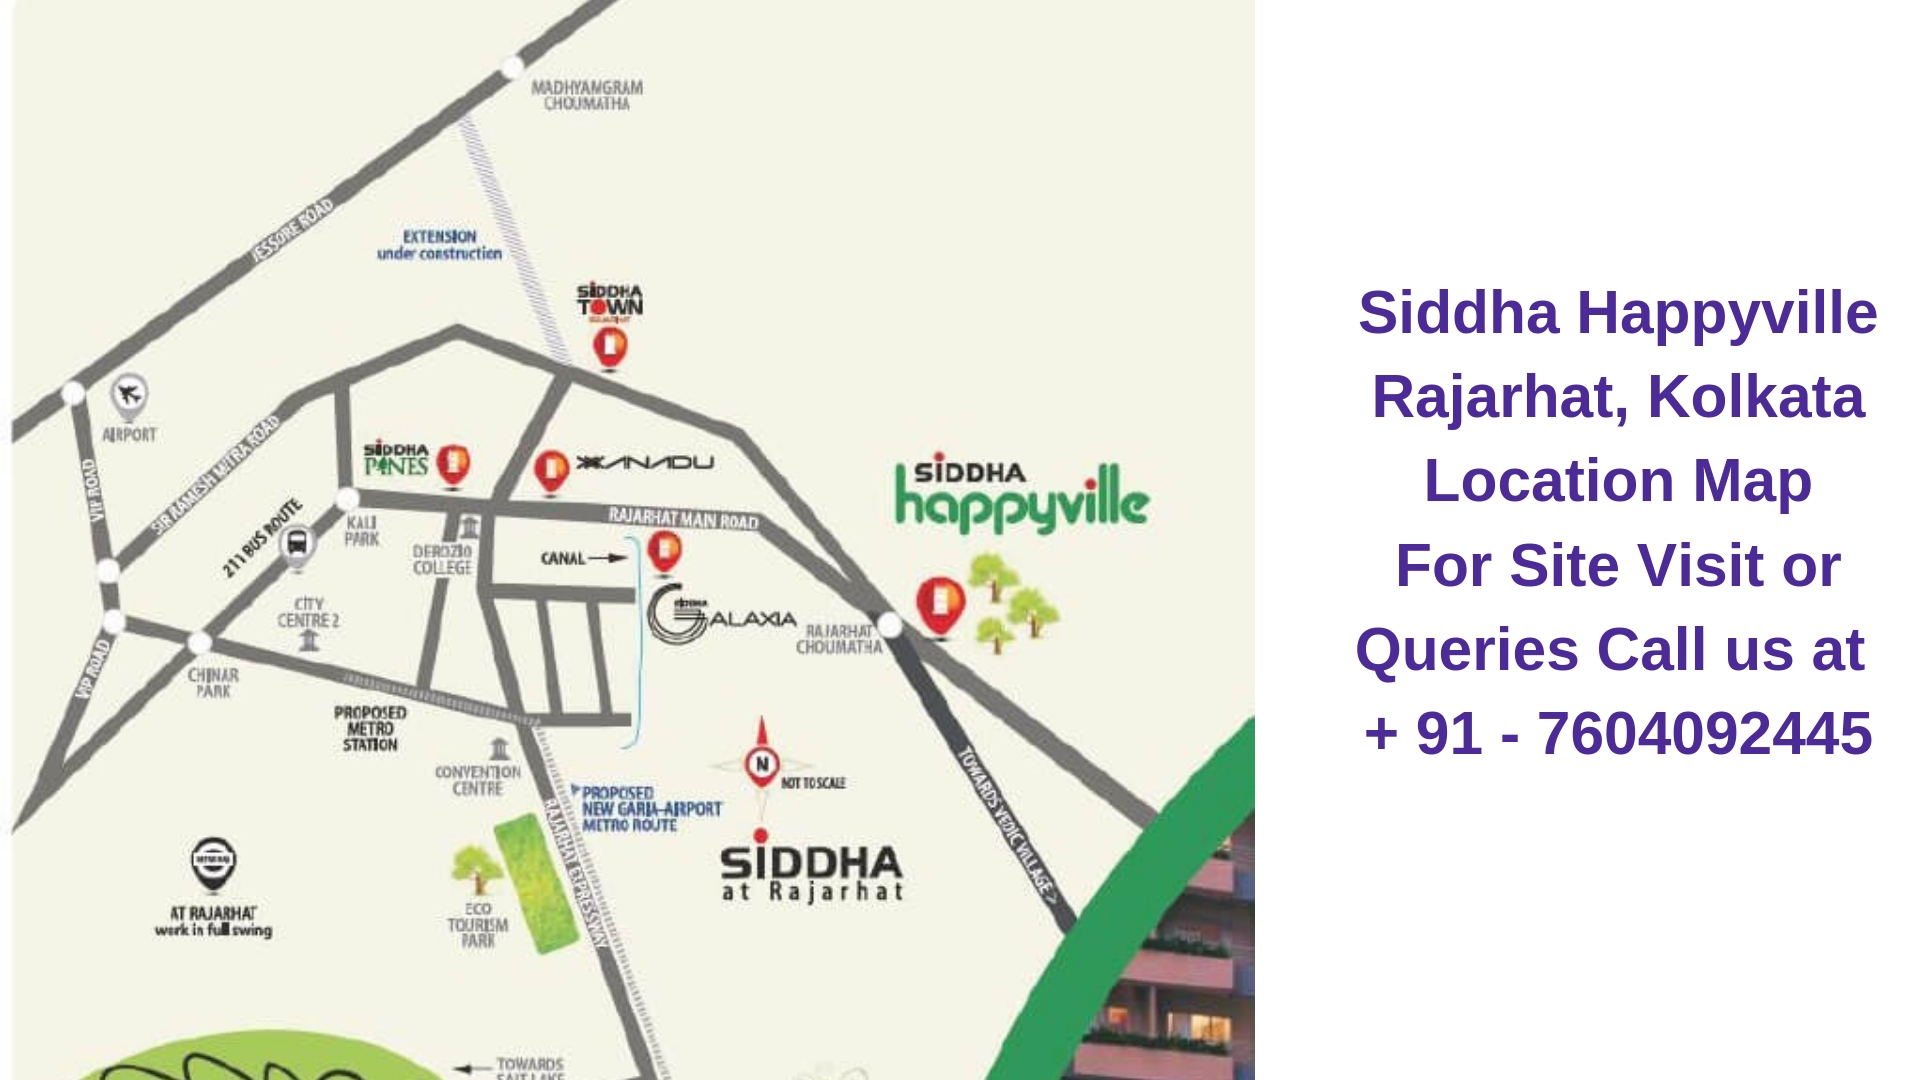 Siddha Happyville Rajarhat, Kolkata Location Map